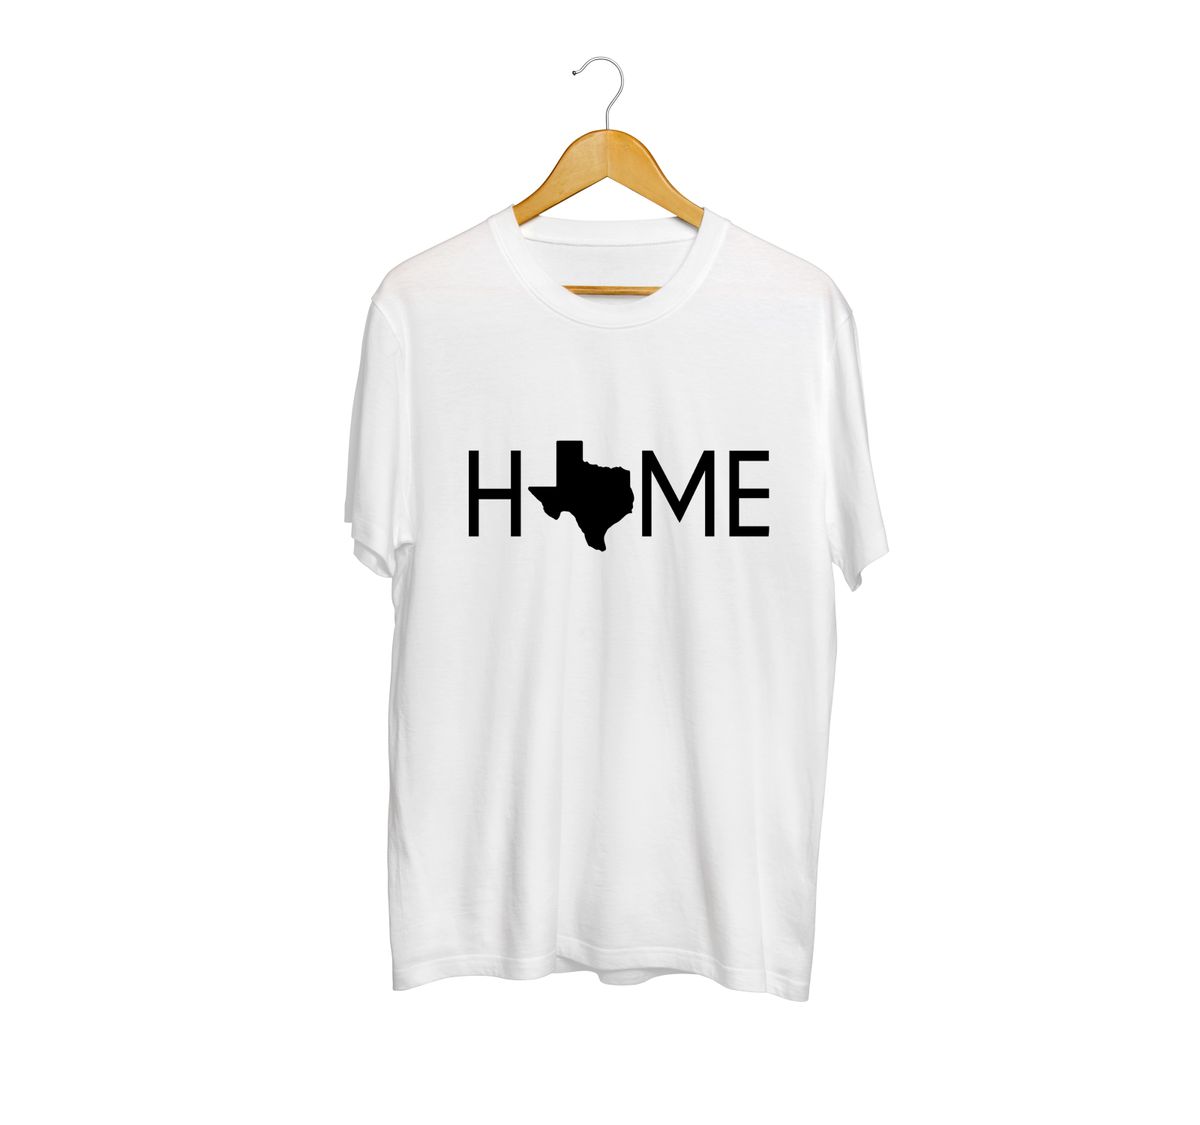 United Texans Hub White Home T-Shirt image 1